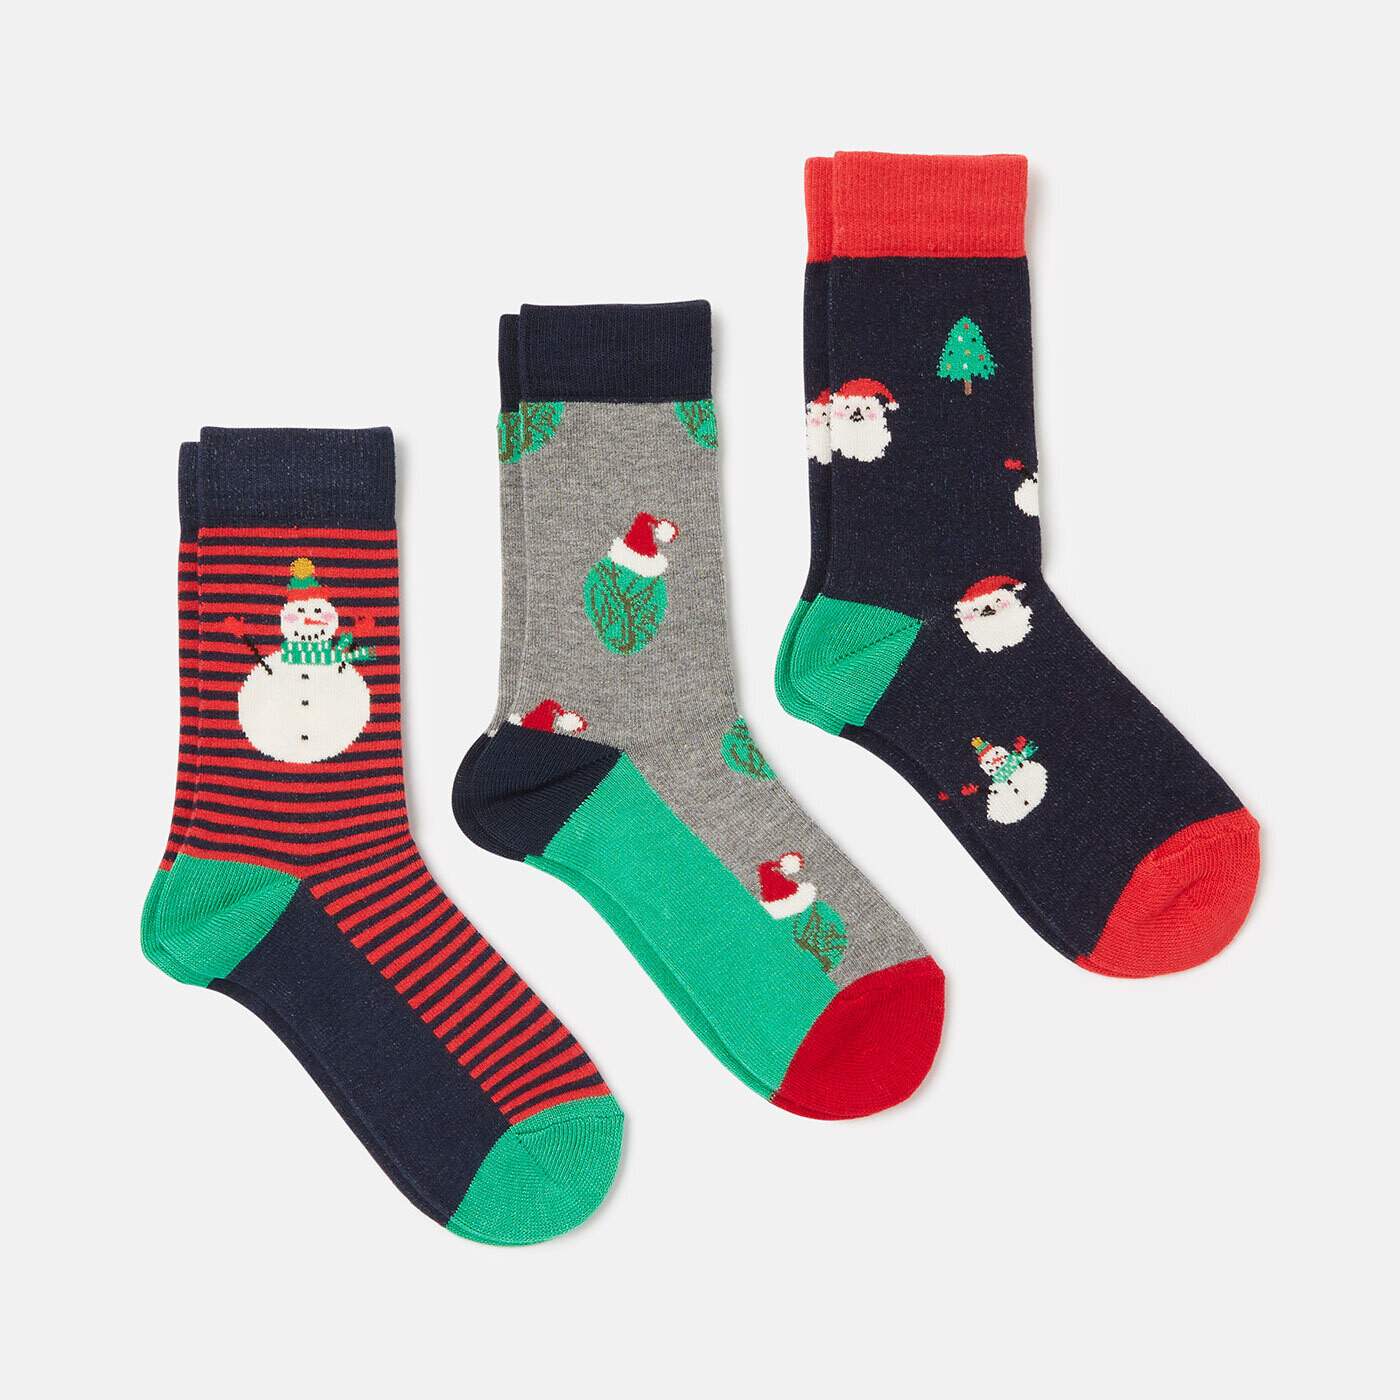 Festive Snowman Socks